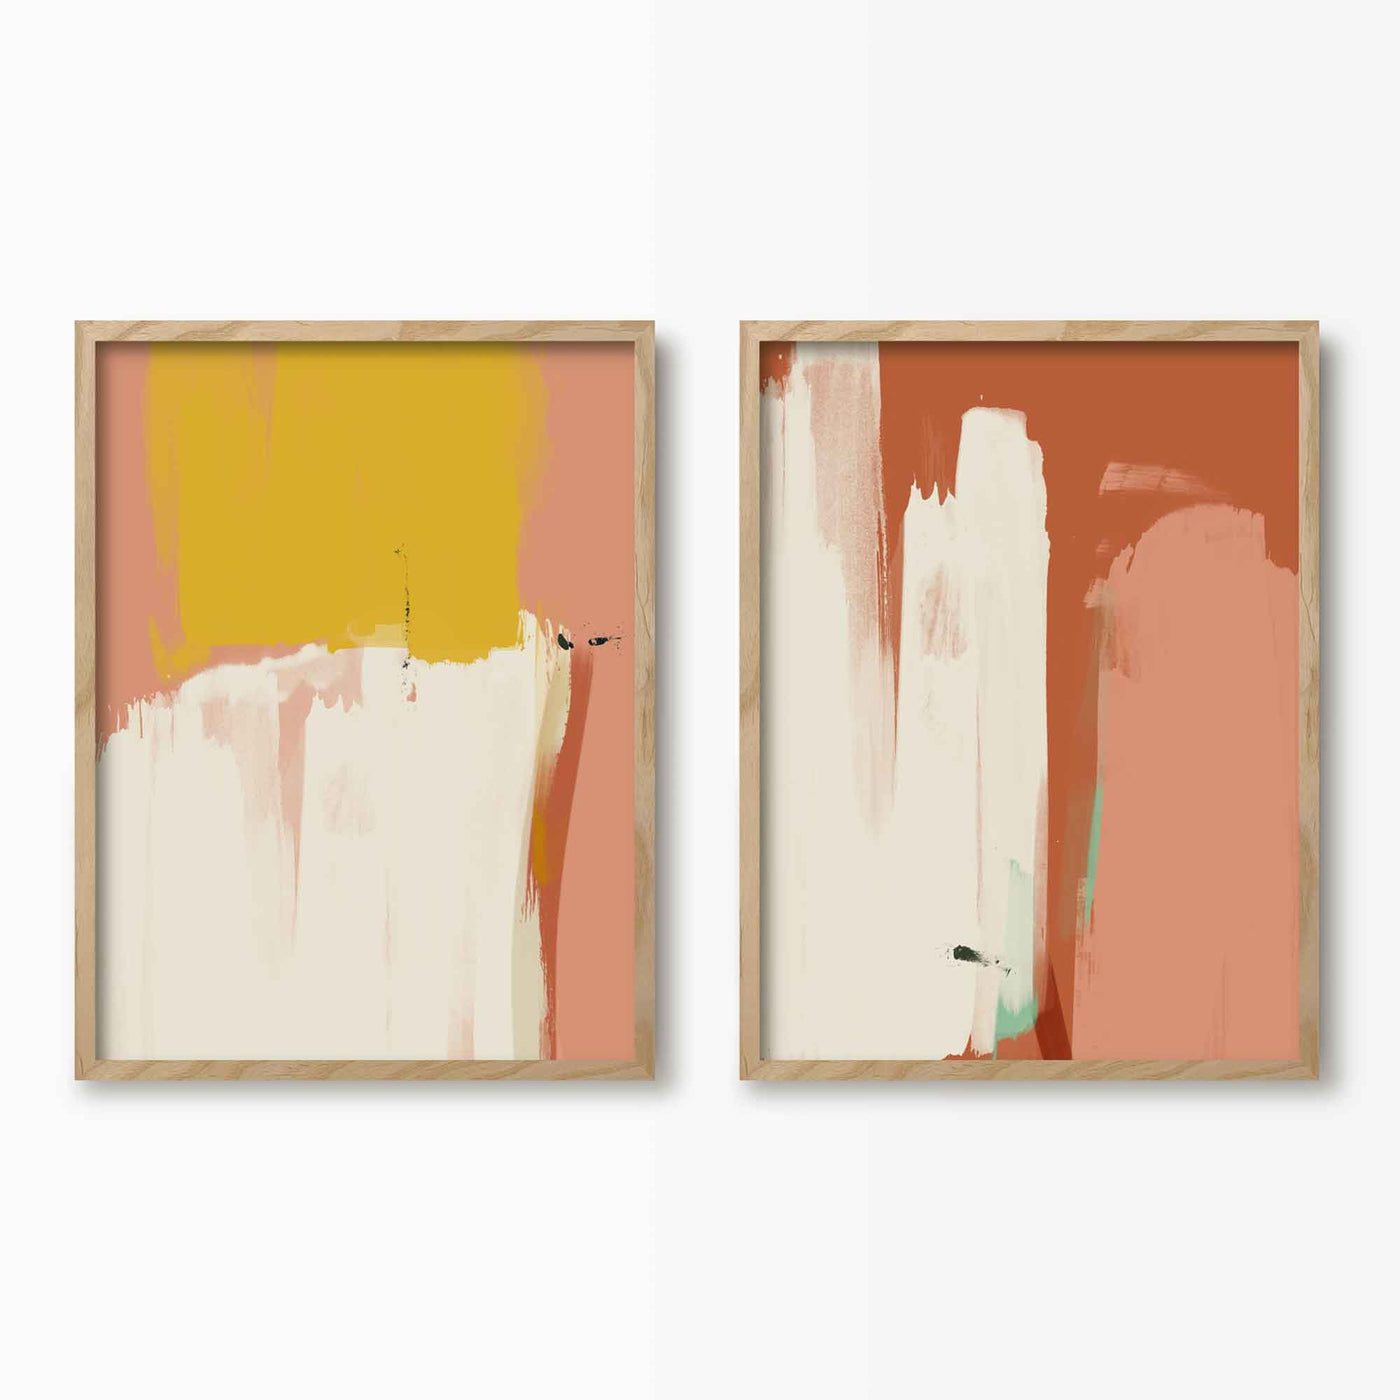 Green Lili 30x40cm (12x16") / Natural Frame Pink & Yellow Abstract Wall Art Set